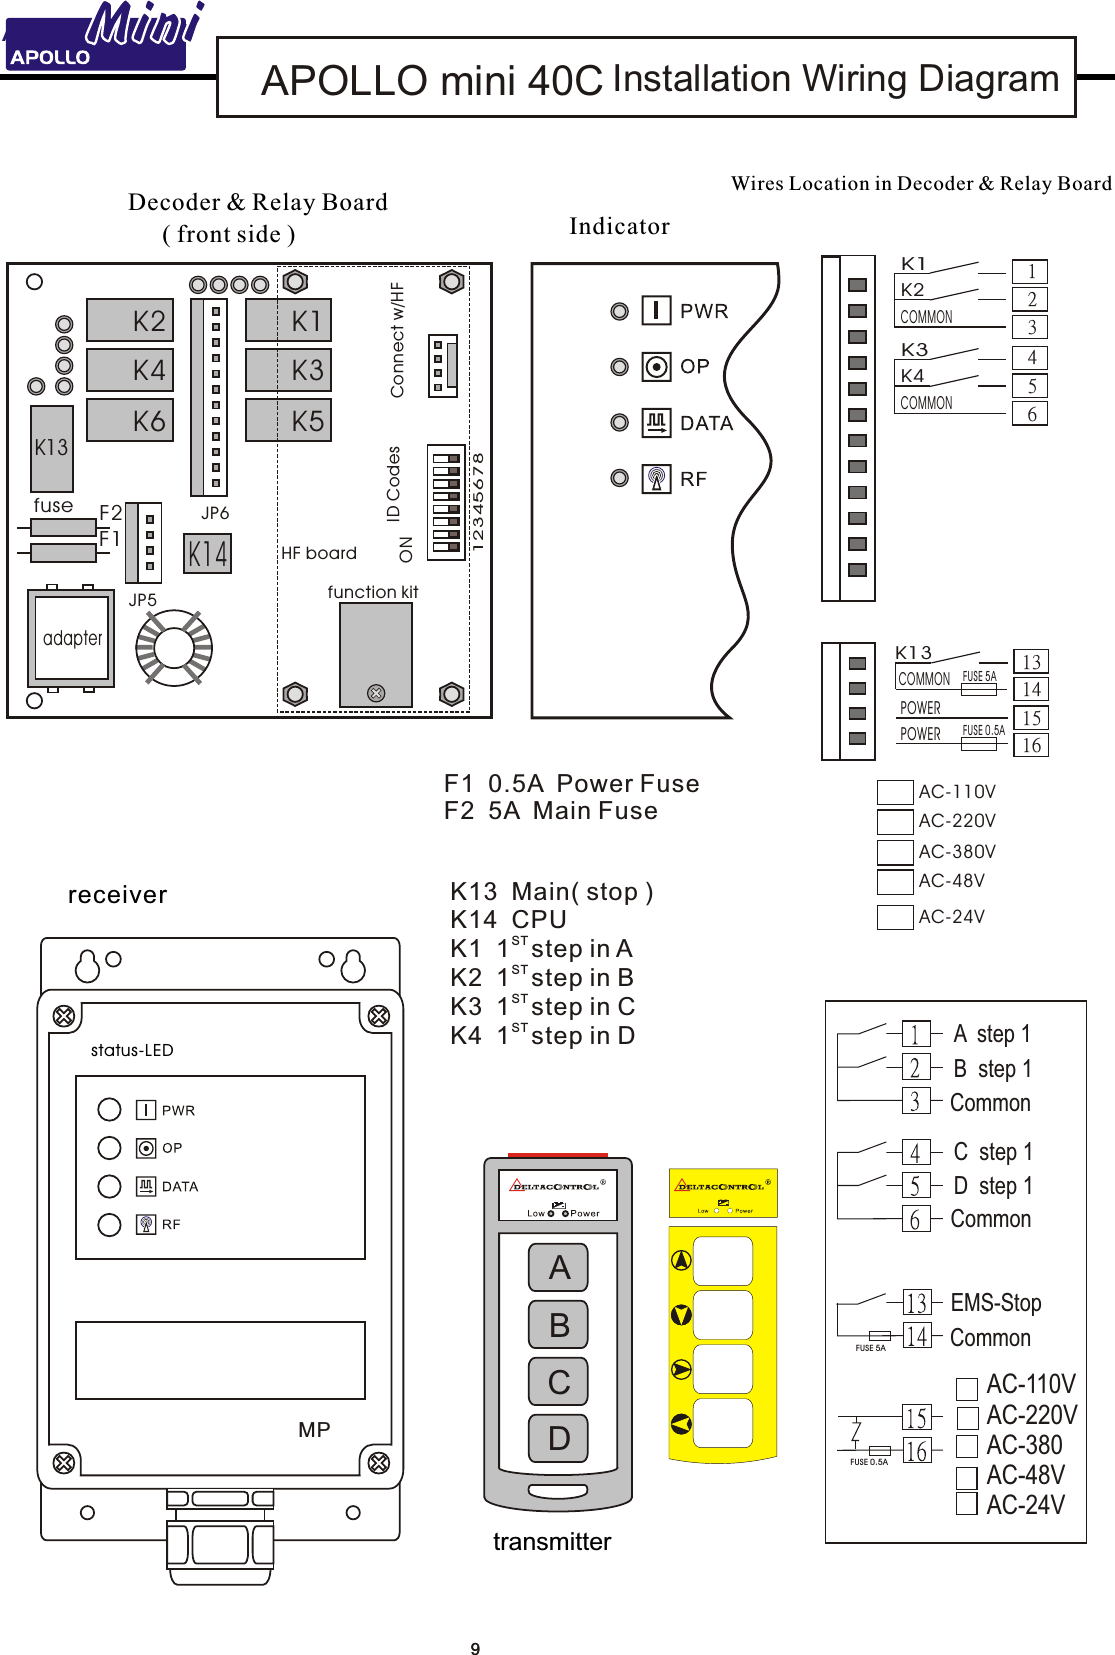    APOLLO mini 40C   APOLLOMini  Installation Wiring DiagramMiniMini9transmitter receiver status-LEDMPK2K14F2F112345678ID CodesHF boardfunction kitConnect w/HFON( front side )fuseadapterK4K6K1K3K5K13JP6JP5Decoder &amp; Relay Board Wires Location in Decoder &amp; Relay Board  F1  0.5A  Power FuseF2  5A  Main FuseIndicatorACBDCommonA  step 1B  step 1C  step 1D  step 1CommonCommonEMS-StopFU SE 5 AFU SE 0 .5 AK13  Main( stop )K14  CPUST K1  1 step in AK2   BK3   CK4   DST 1 step in ST 1 step in ST 1 step in K13COMMONFUSE 5APOWERPOWER FUSE 0.5A15161314K1K2123COMMONK3K4456COMMON AC-110V AC-220V AC-380 AC-48V AC-24VAC-110VAC-220VAC-380VAC-48VAC-24V9